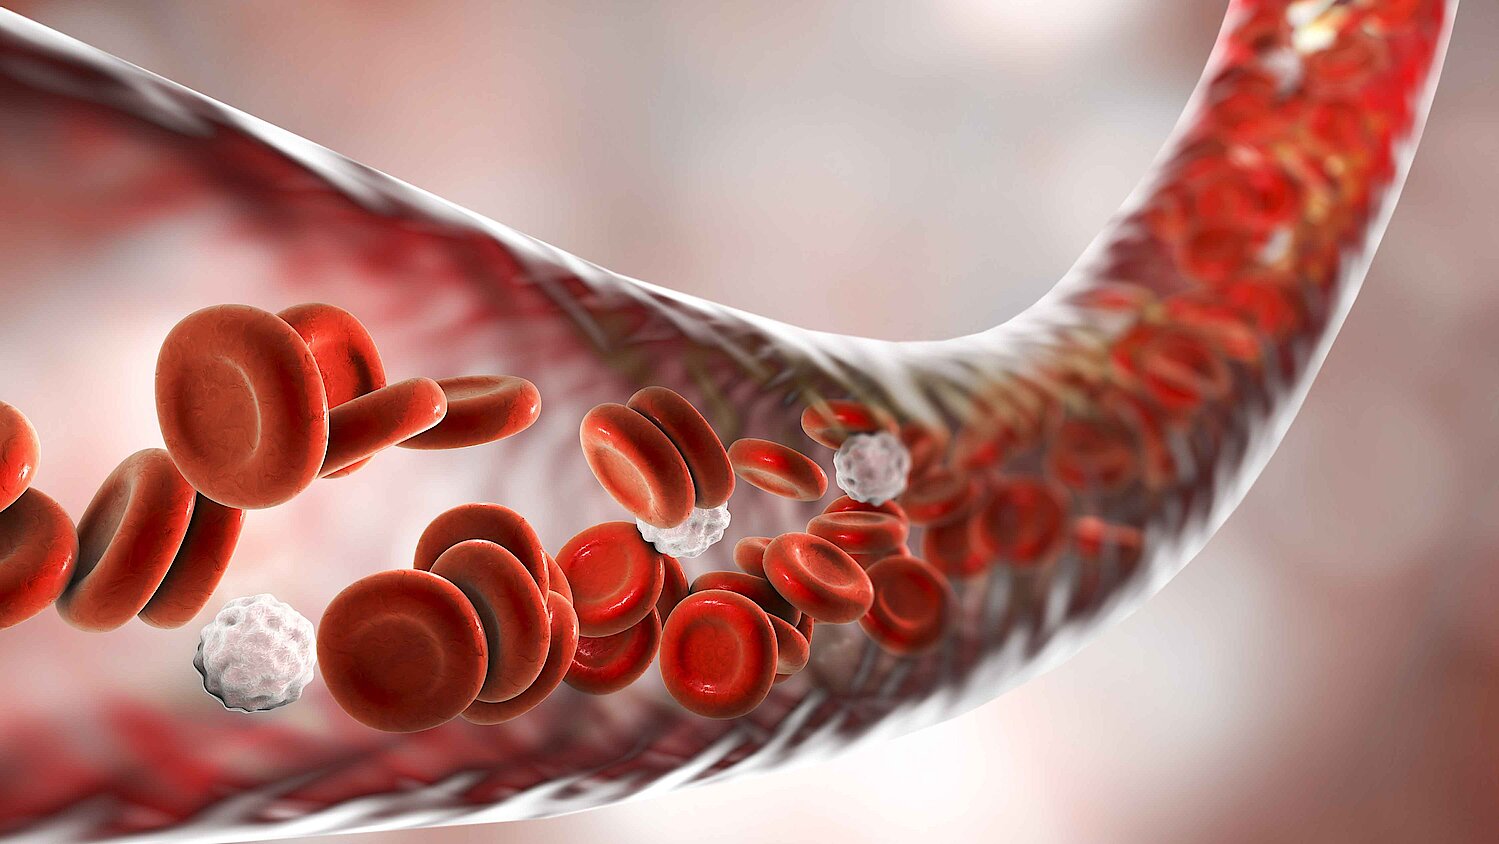 Three dimensional illustration of blood vessel with flowing erythrocytes and leukocytes.